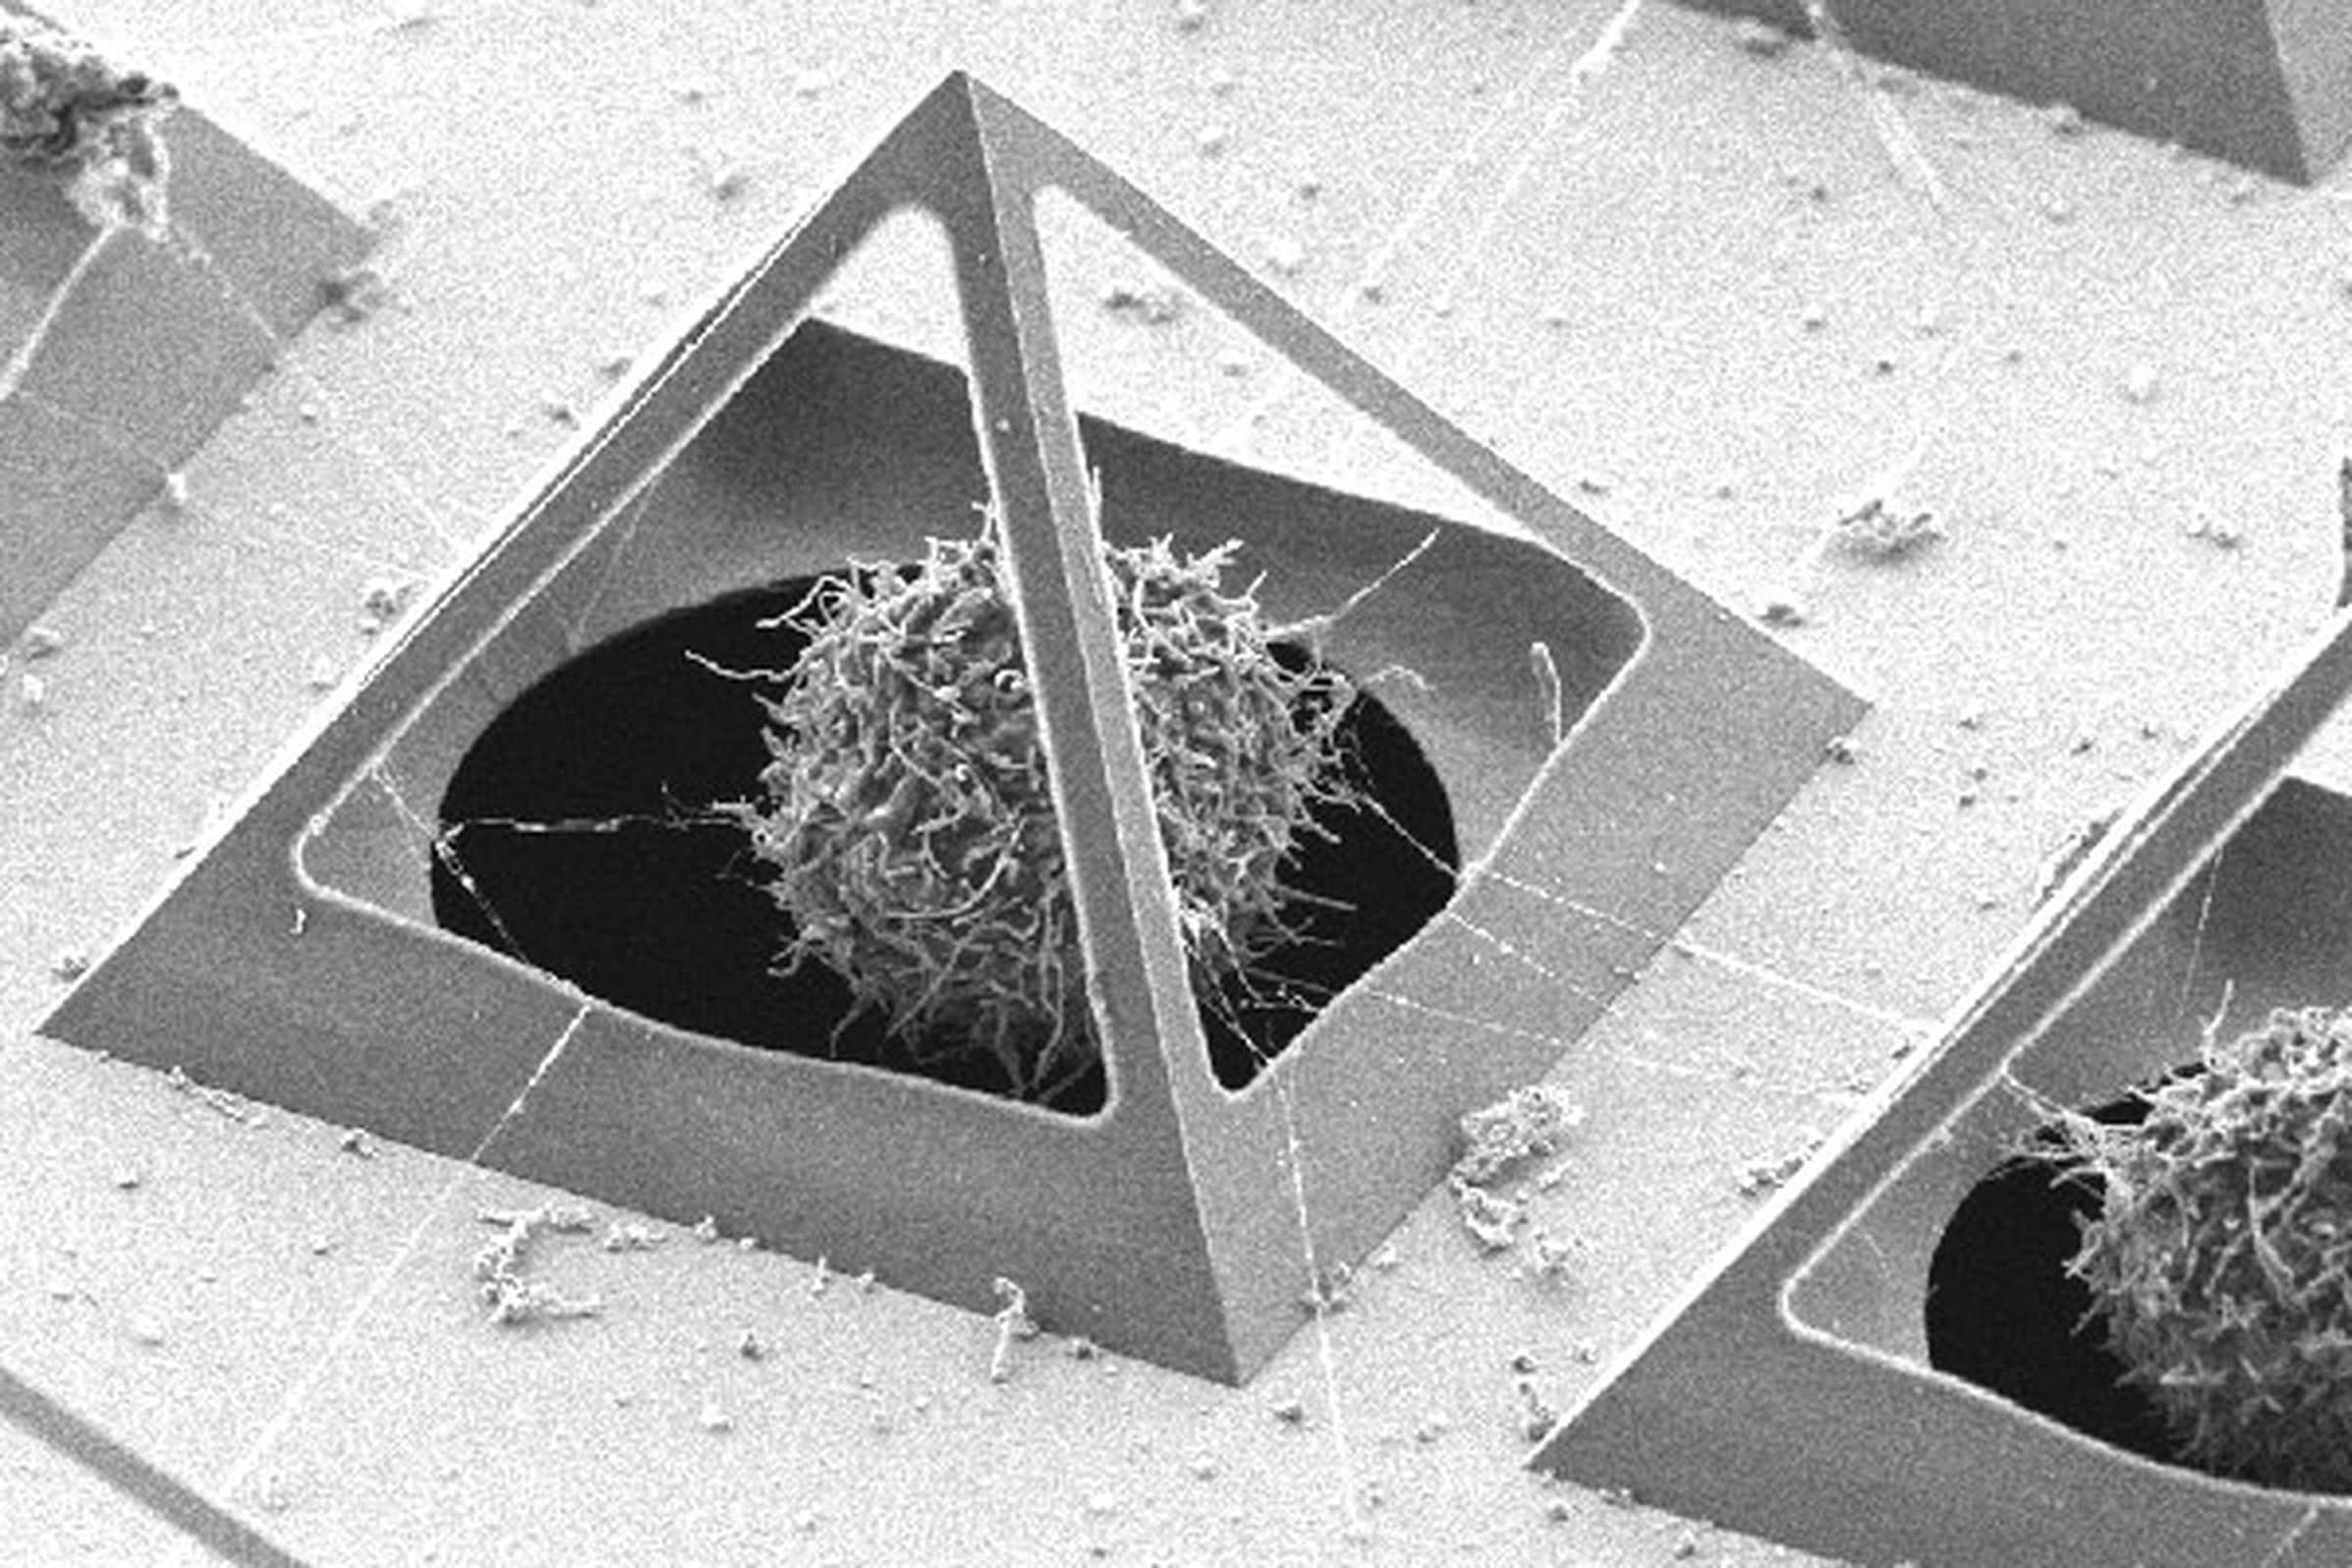 Microscopic pyramid